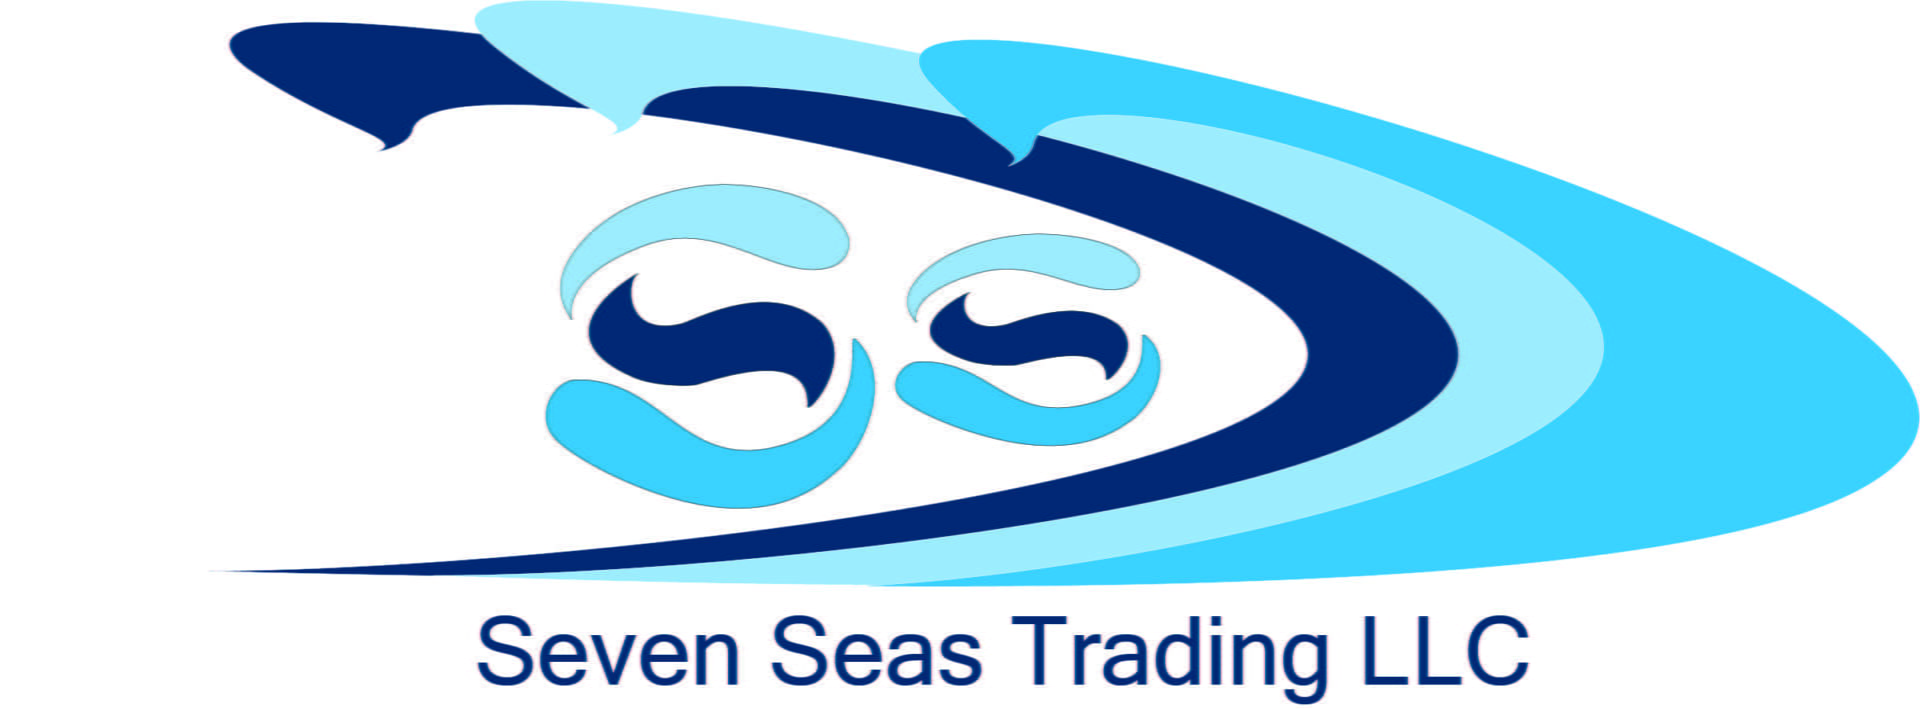 SevenSeas Trading